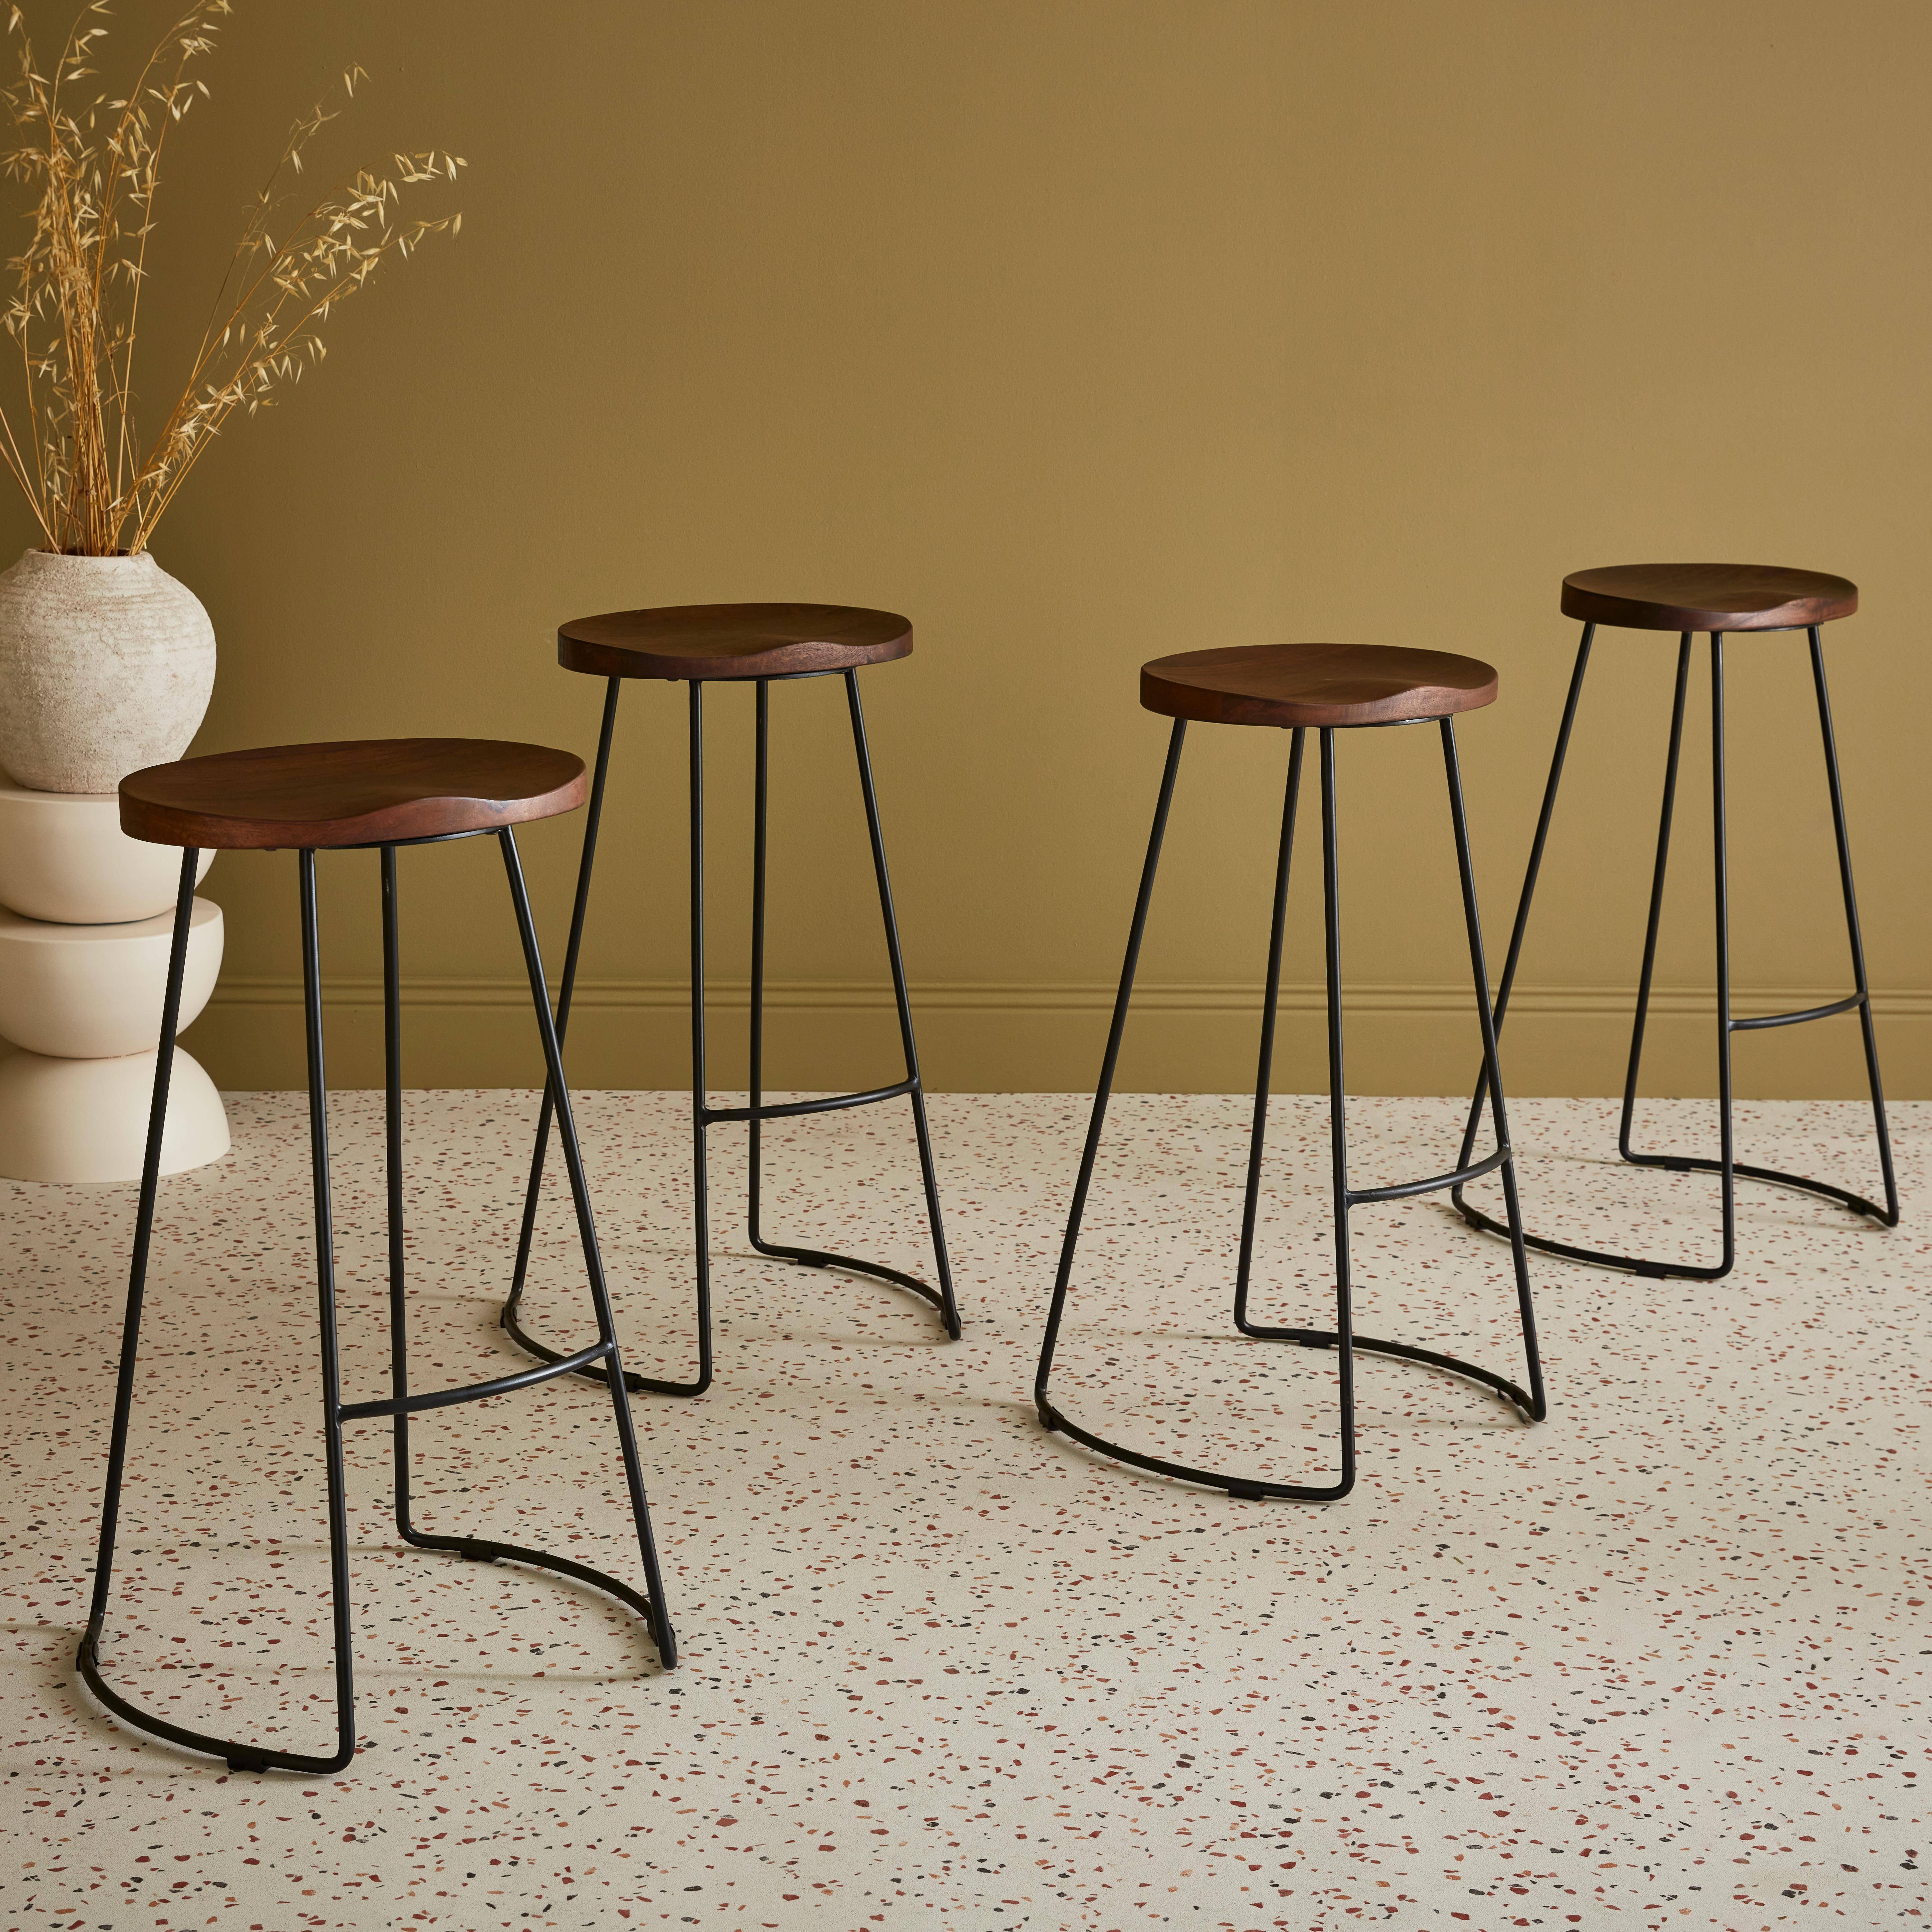 Set of 4 industrial metal and wooden bar stools, 47x40x75cm, Jaya, Light Walnut, Mango wood seat, black metal legs,sweeek,Photo2